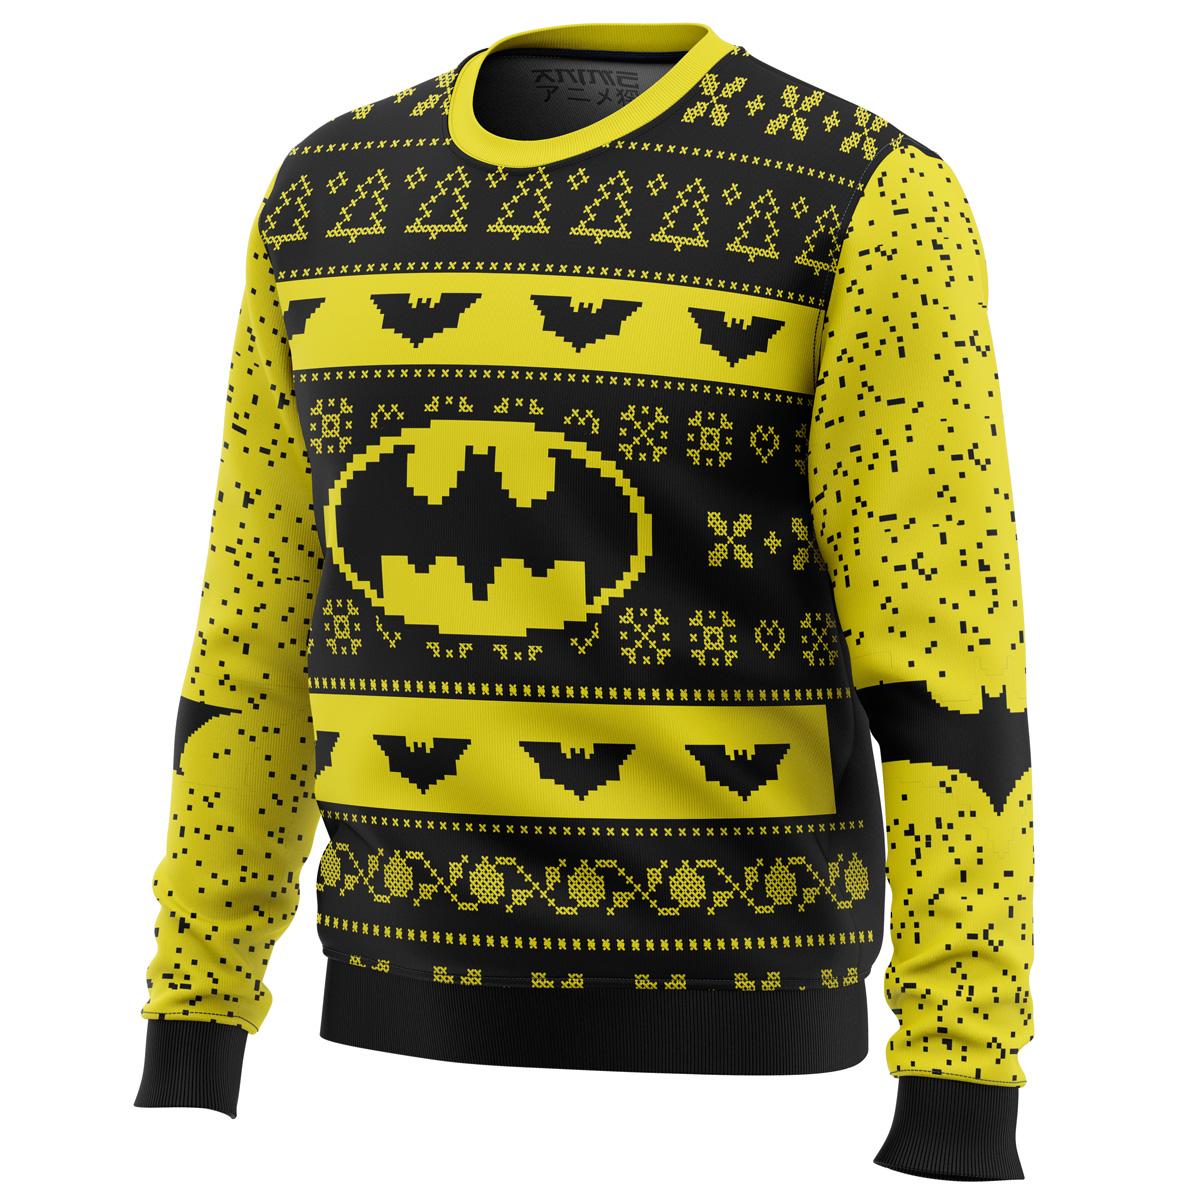 Batman Ugly Sweater